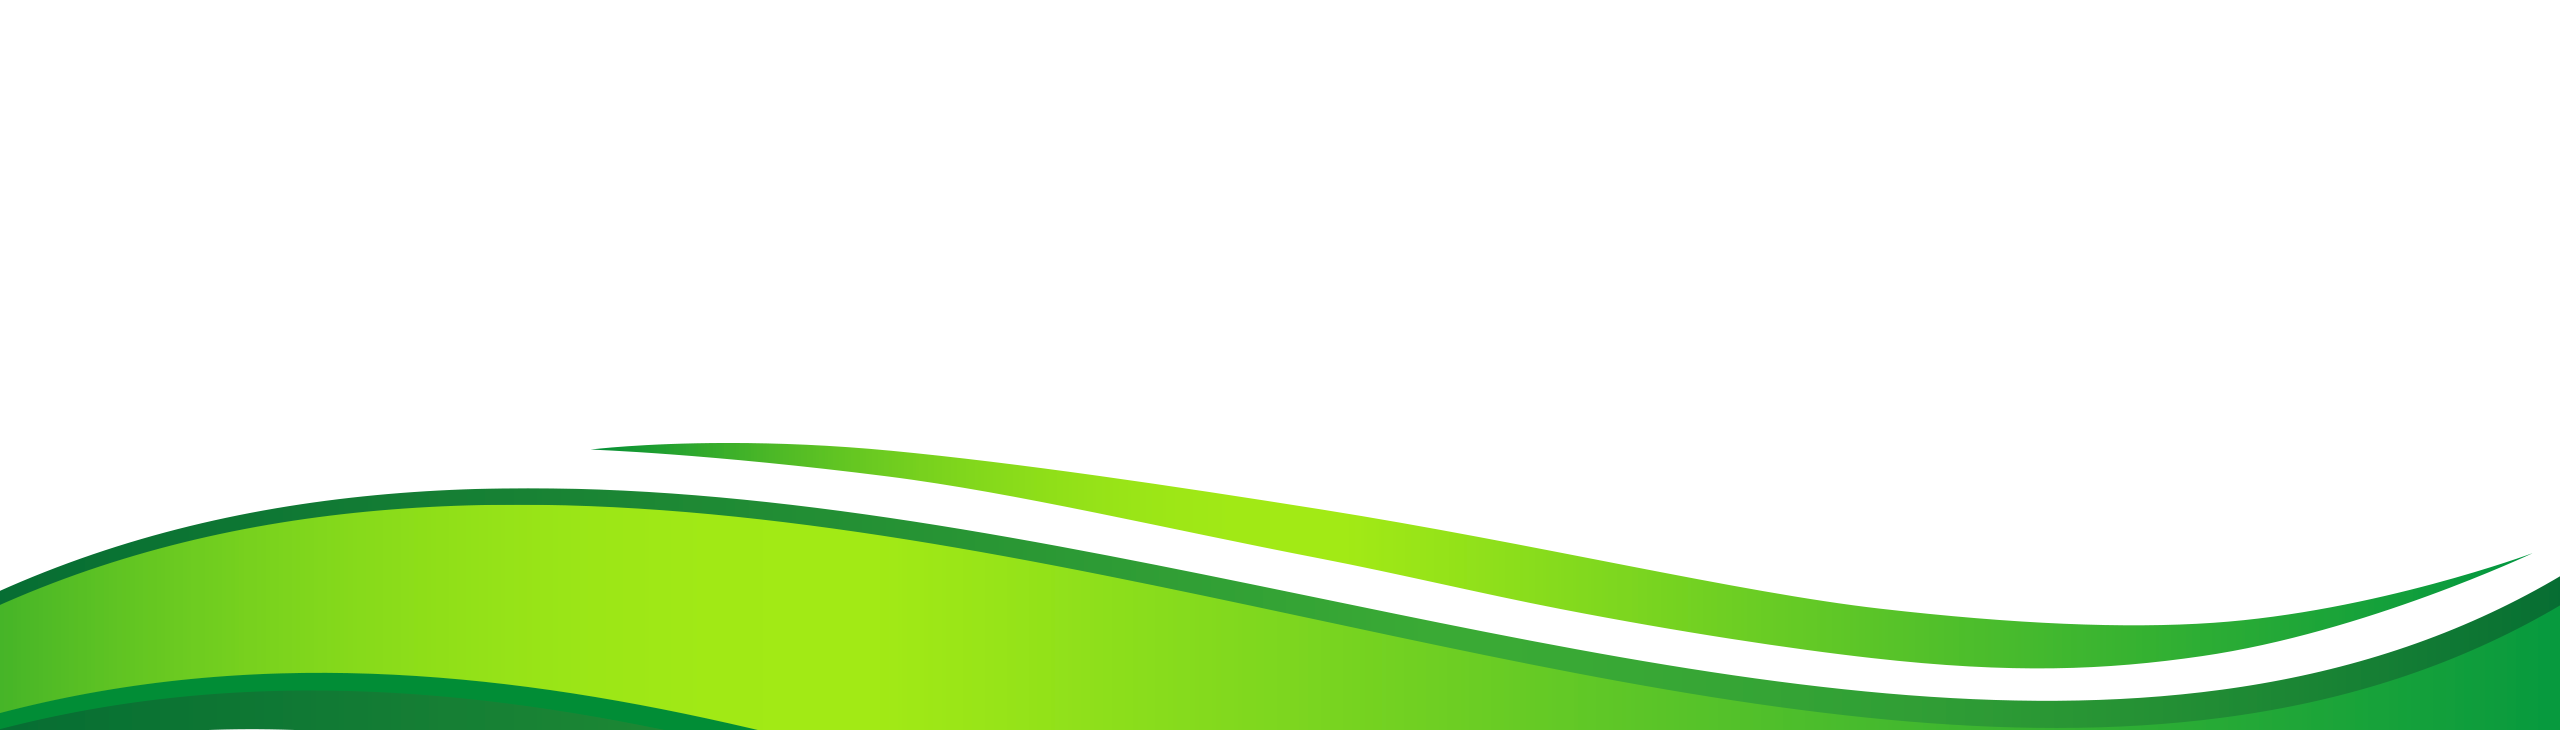 Vektor-grüne Welle PNG-transparentes Bild